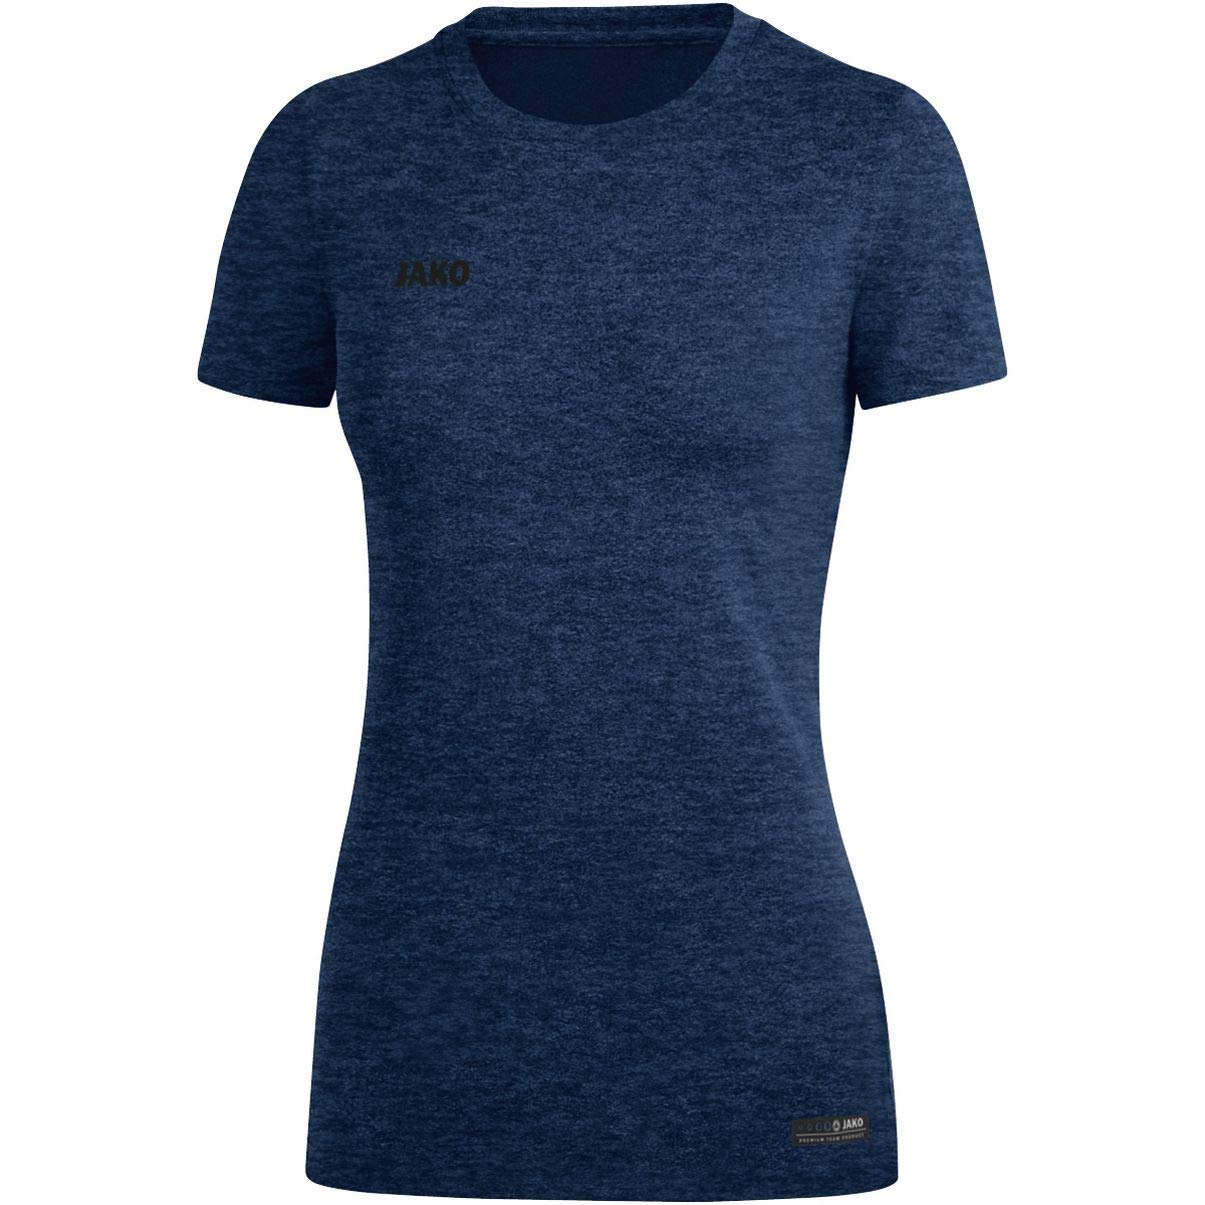 JAKO Damen T-Shirt Premium Basics, marine meliert, 40, 6129